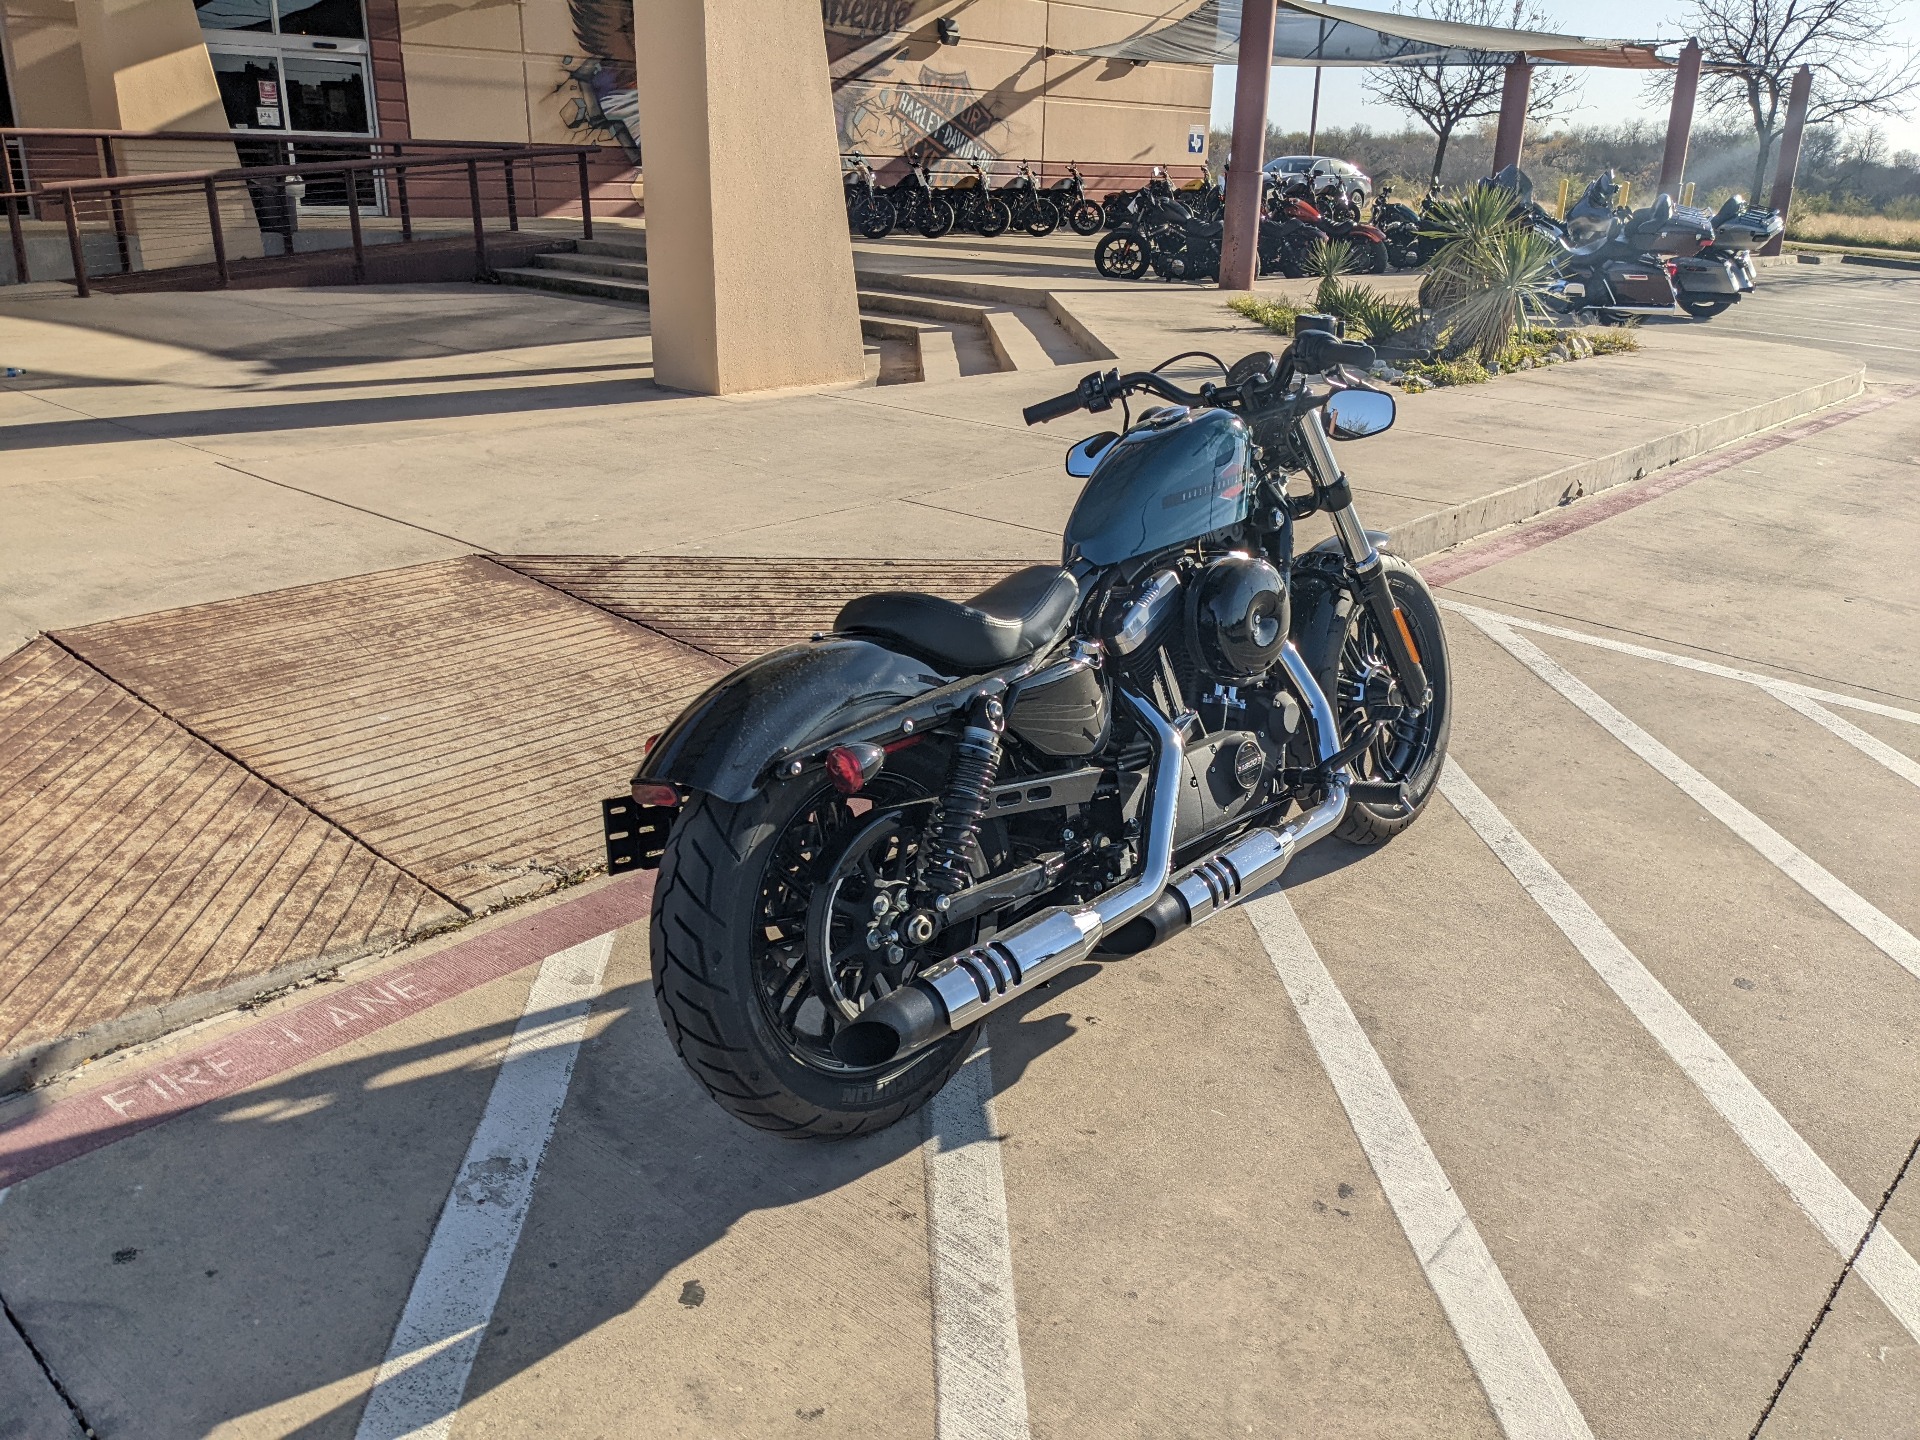 2021 Harley-Davidson Forty-Eight® in San Antonio, Texas - Photo 8